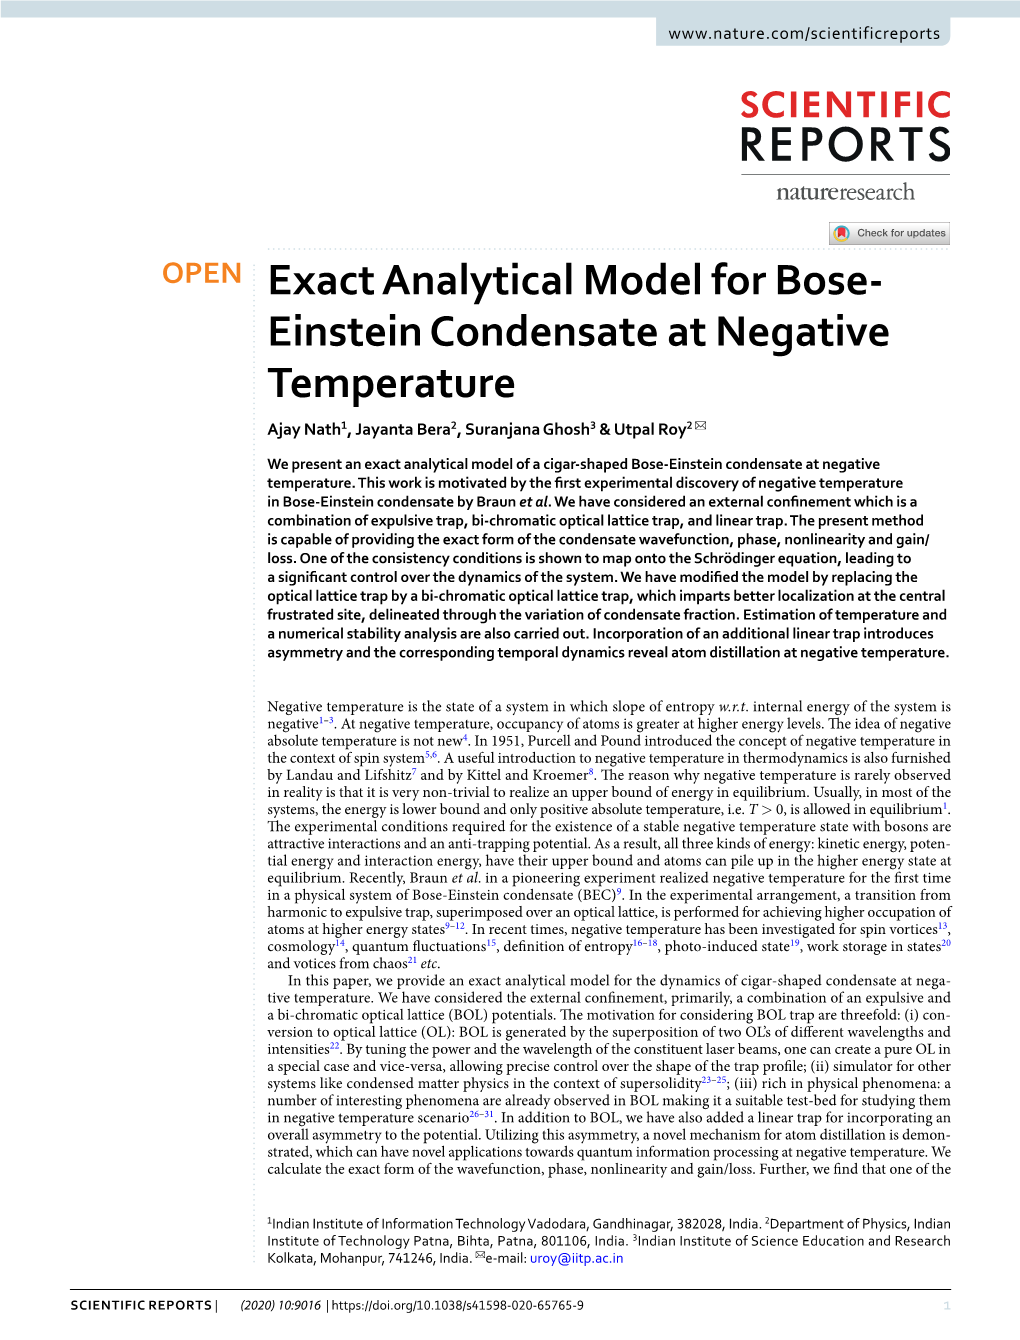 Exact Analytical Model for Bose-Einstein Condensate At